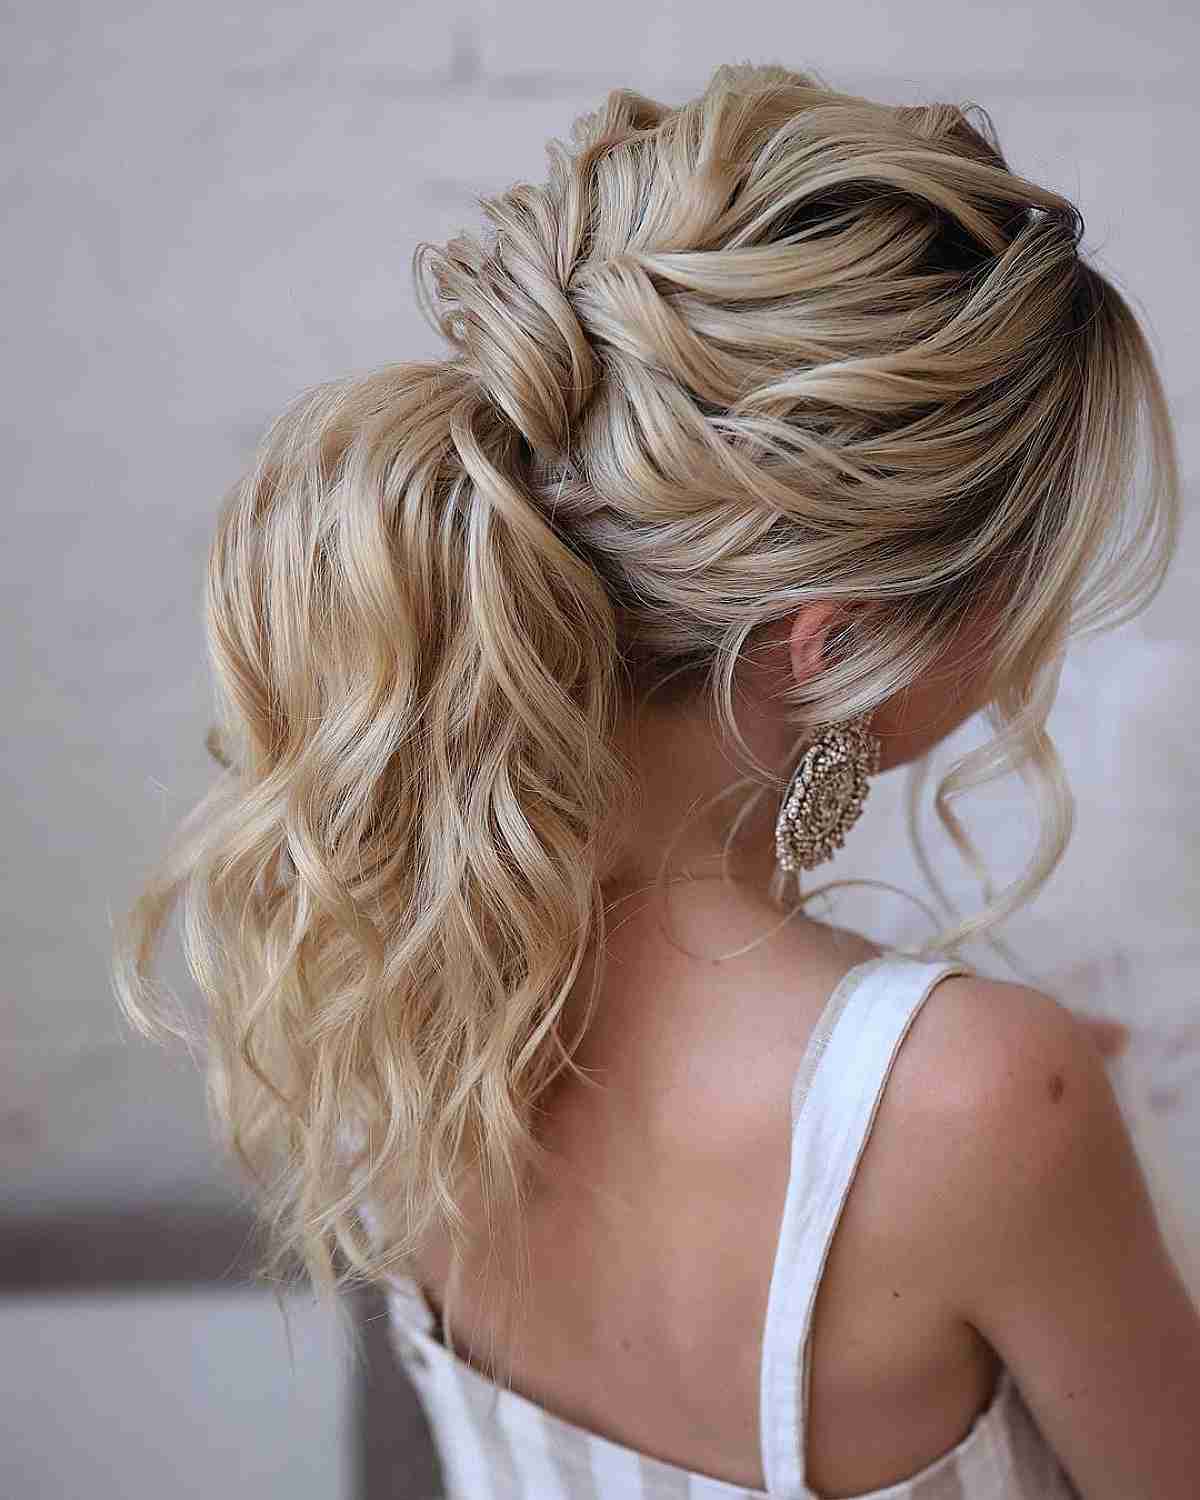 Stunning Textured Blonde Updo for a Wedding